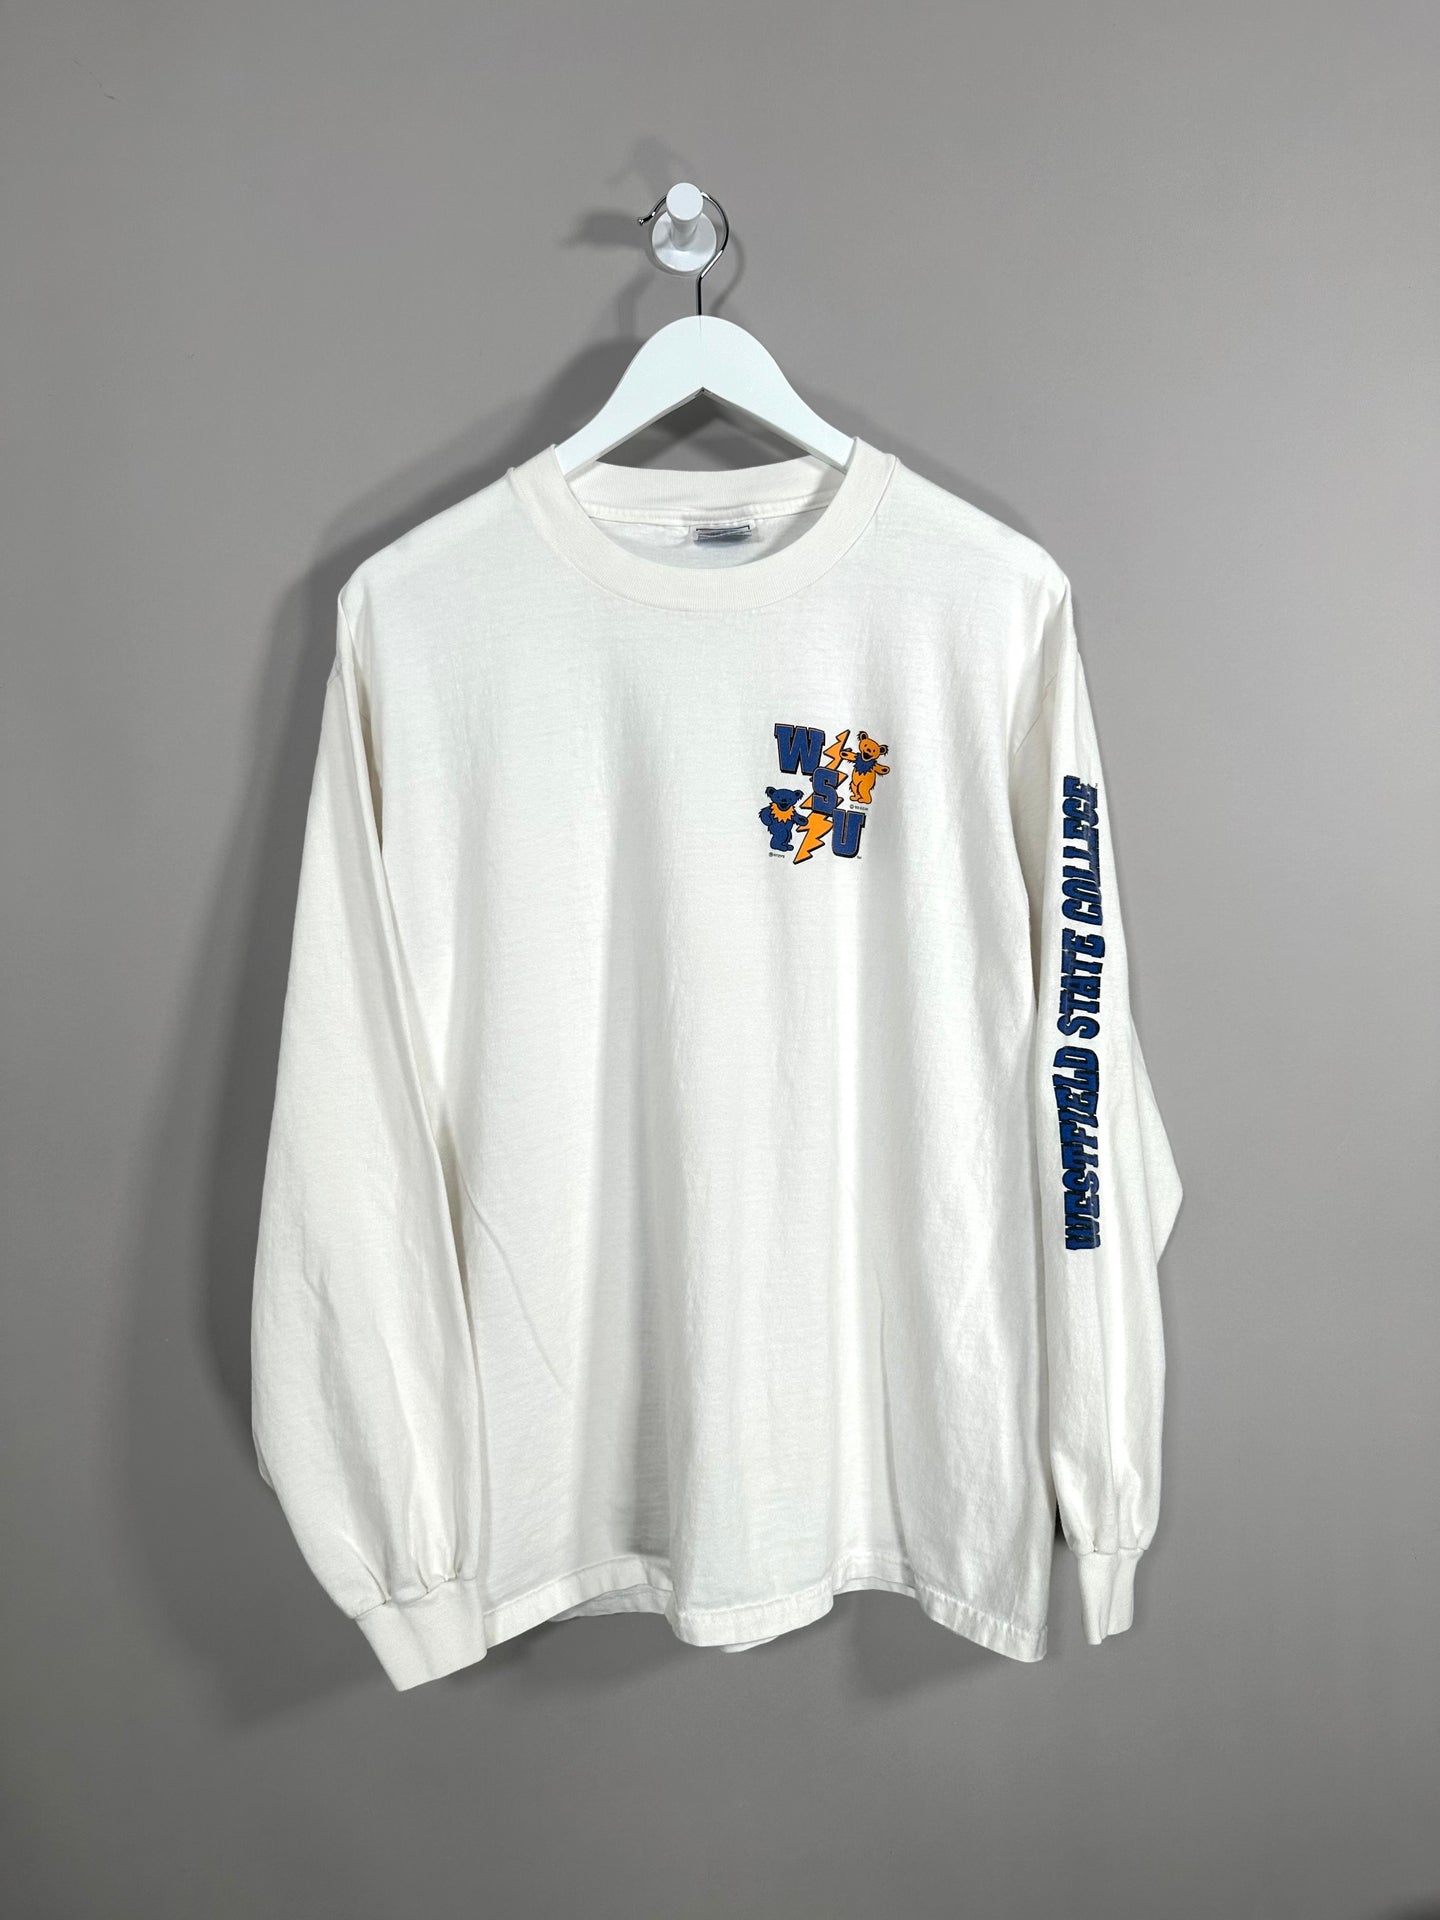 90s Grateful Dead WSU T Shirt - L